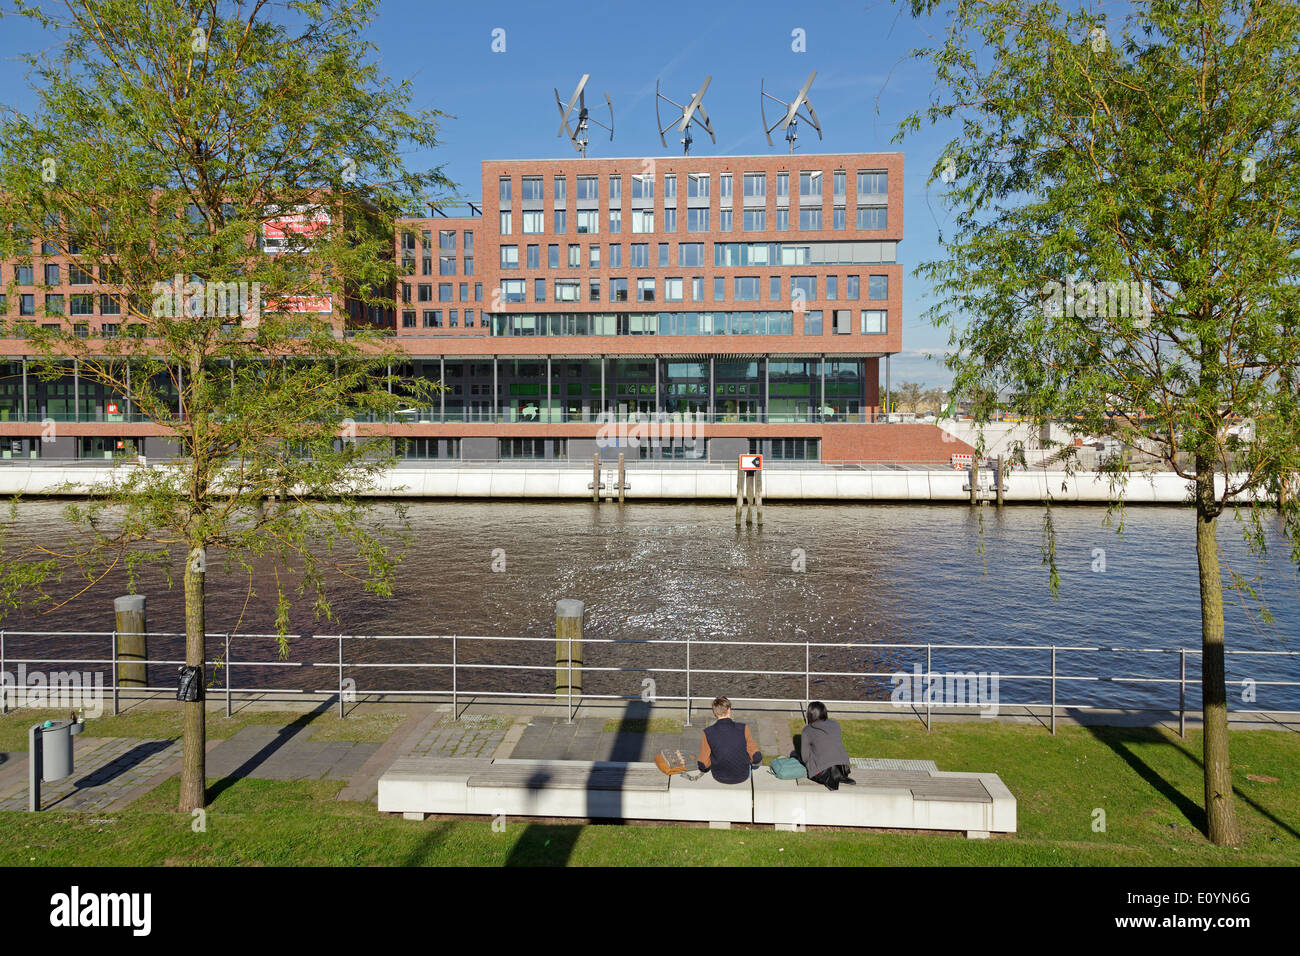 Greenpeace-Zentrale, Elbarkaden, Hafen City, Hamburg, Deutschland Stockfoto